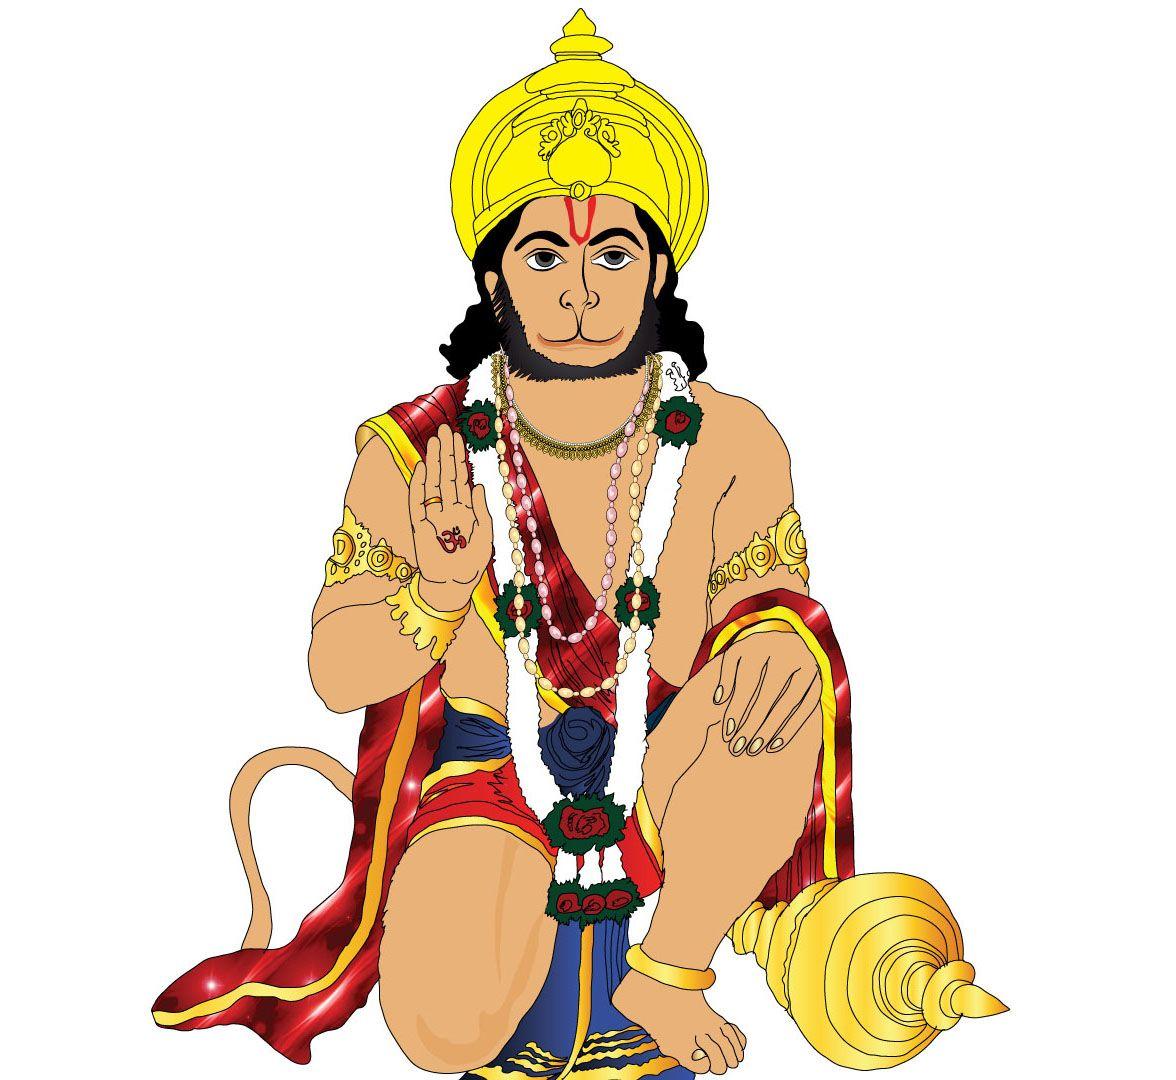 Lord Hanuman Wallpaper. Hanuman Ji Wallpaper. Free Download Hanuman Ji Wallpaper. Lord Hanuman Photo. Free Hanuman Ji Photo. Hanuman Ji Image. Free Download Hanuman Ji Photo in HD Quality